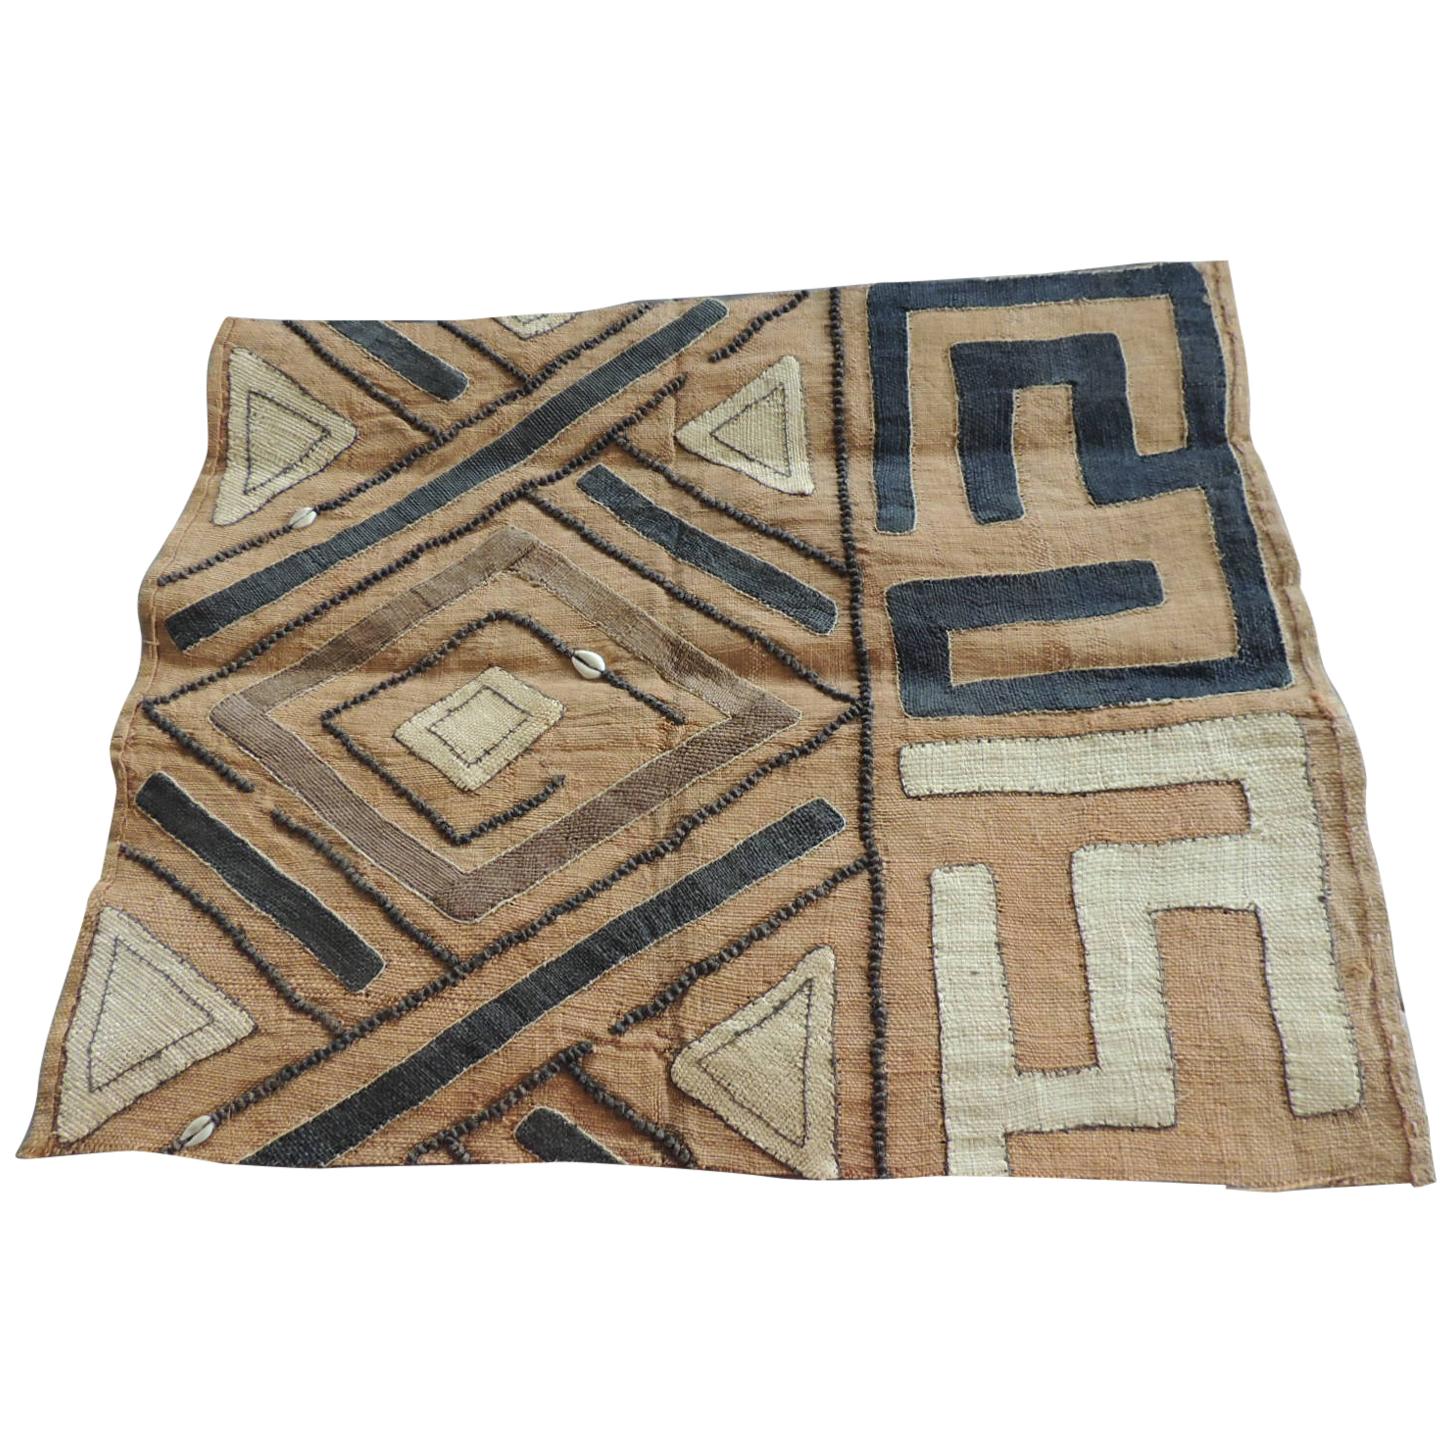 Vintage Brown and Black Earth Tones African Applique Kuba Textile Fragment